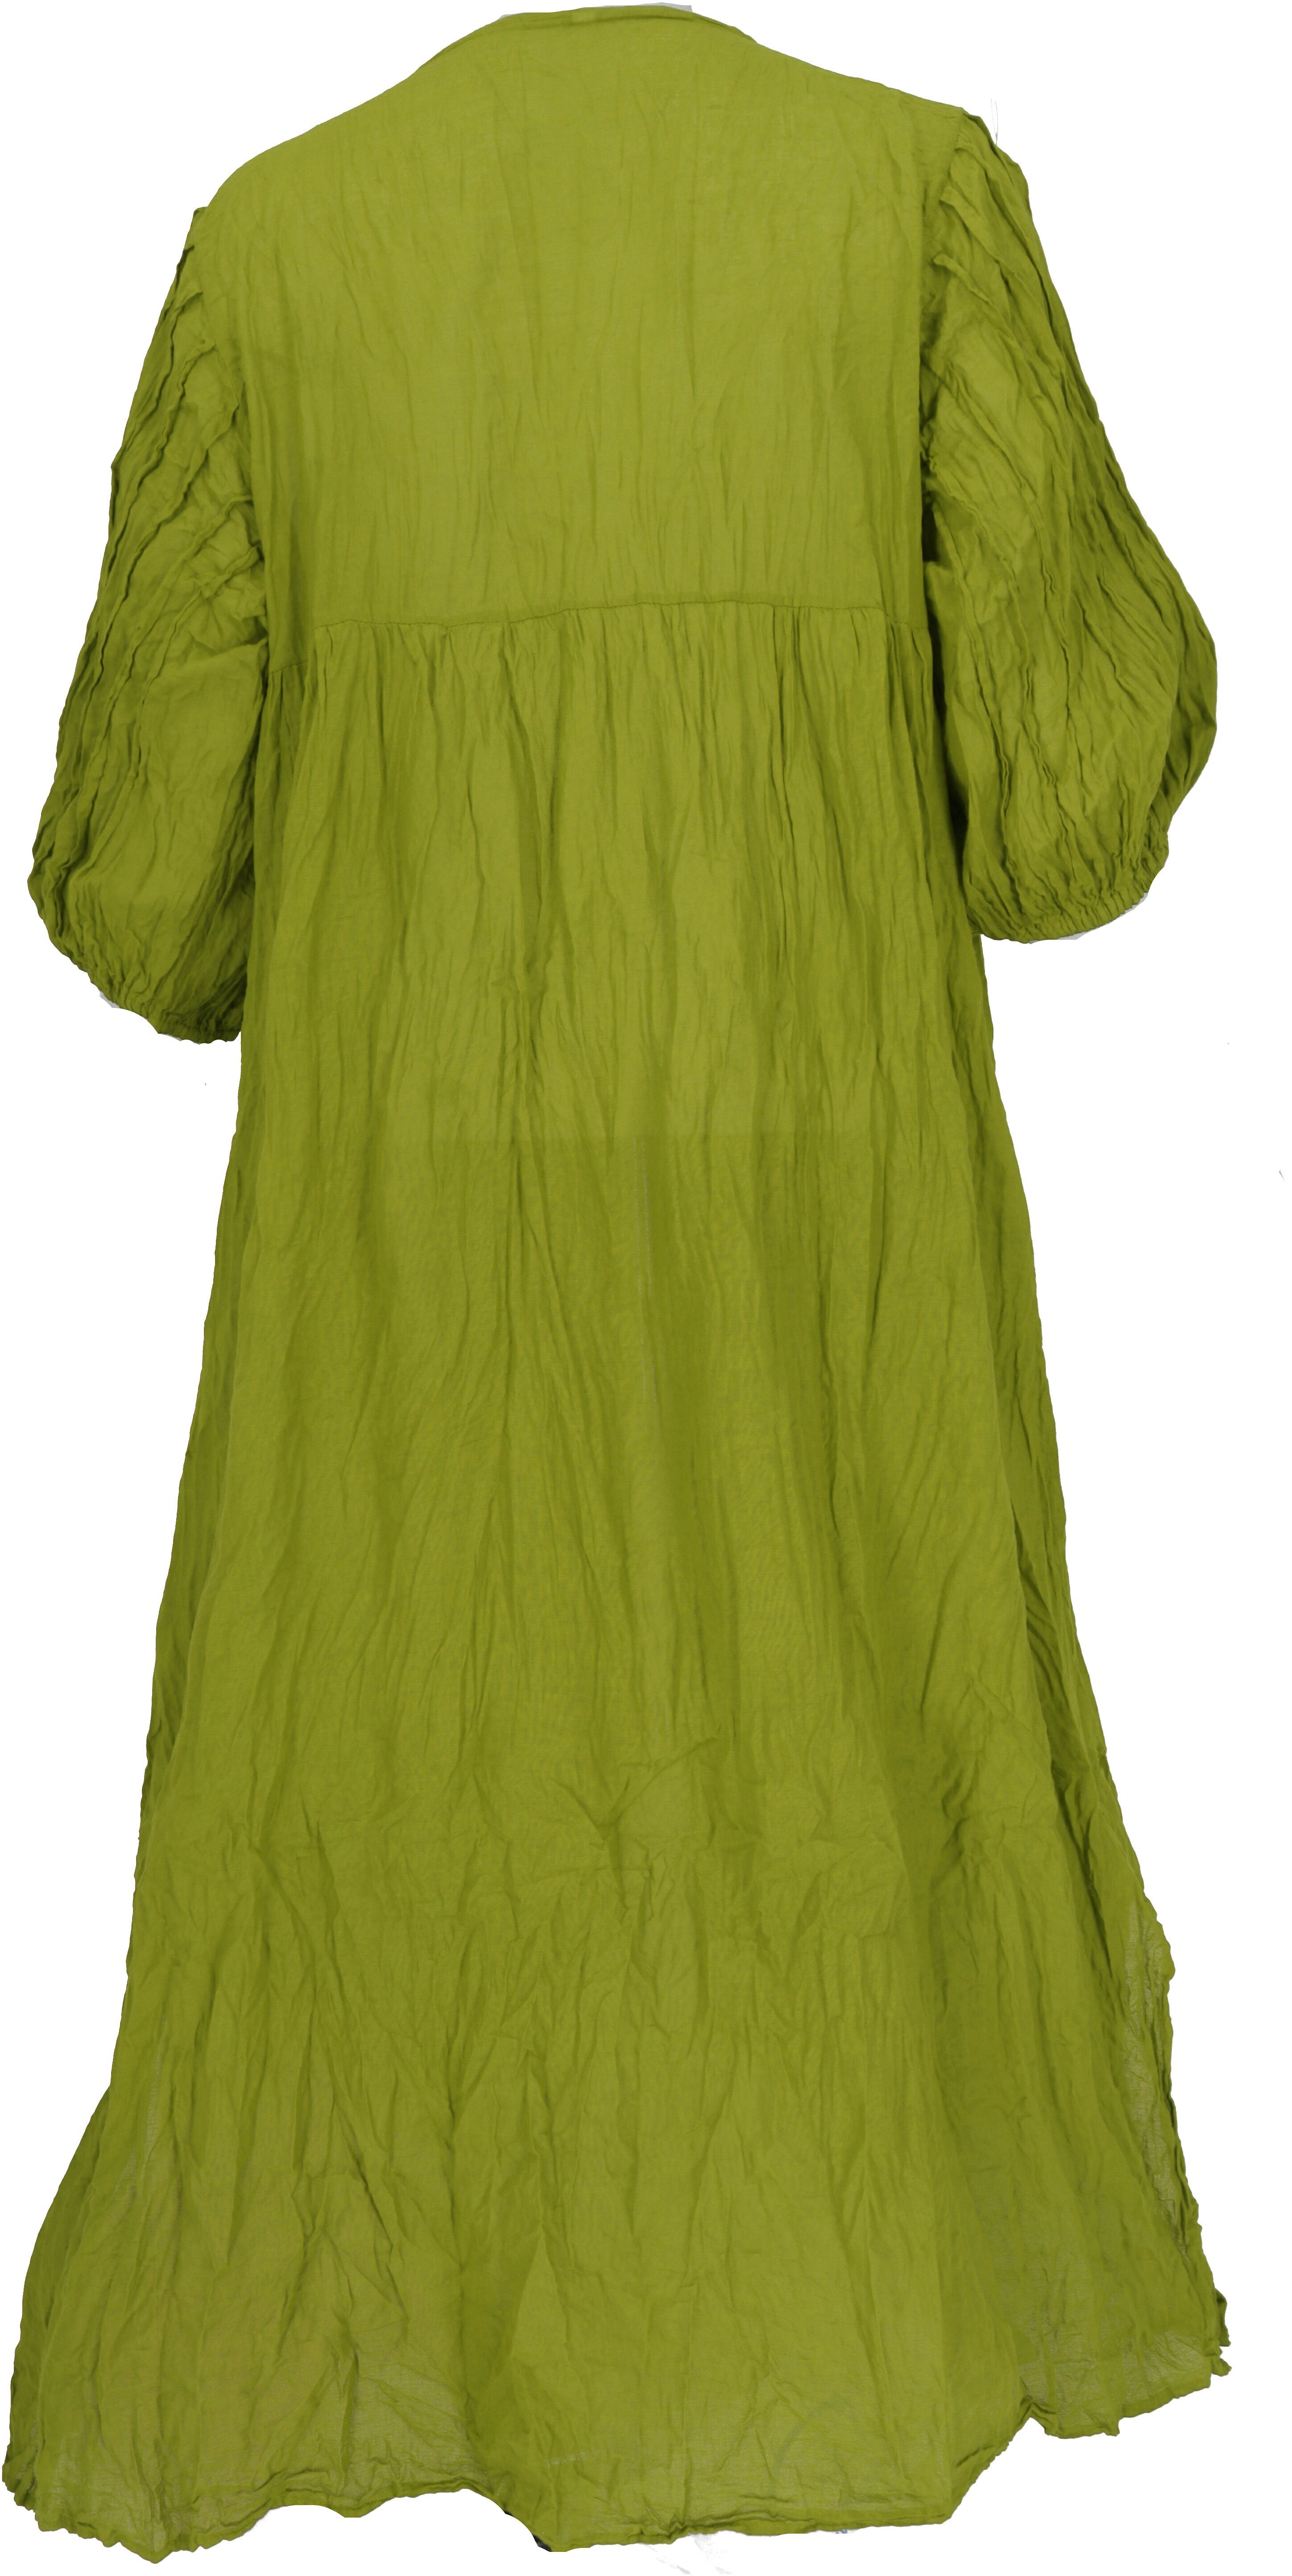 für.. Boho alternative lemongrün Midikleid Maxikleid, langes Guru-Shop Sommerkleid luftiges Bekleidung